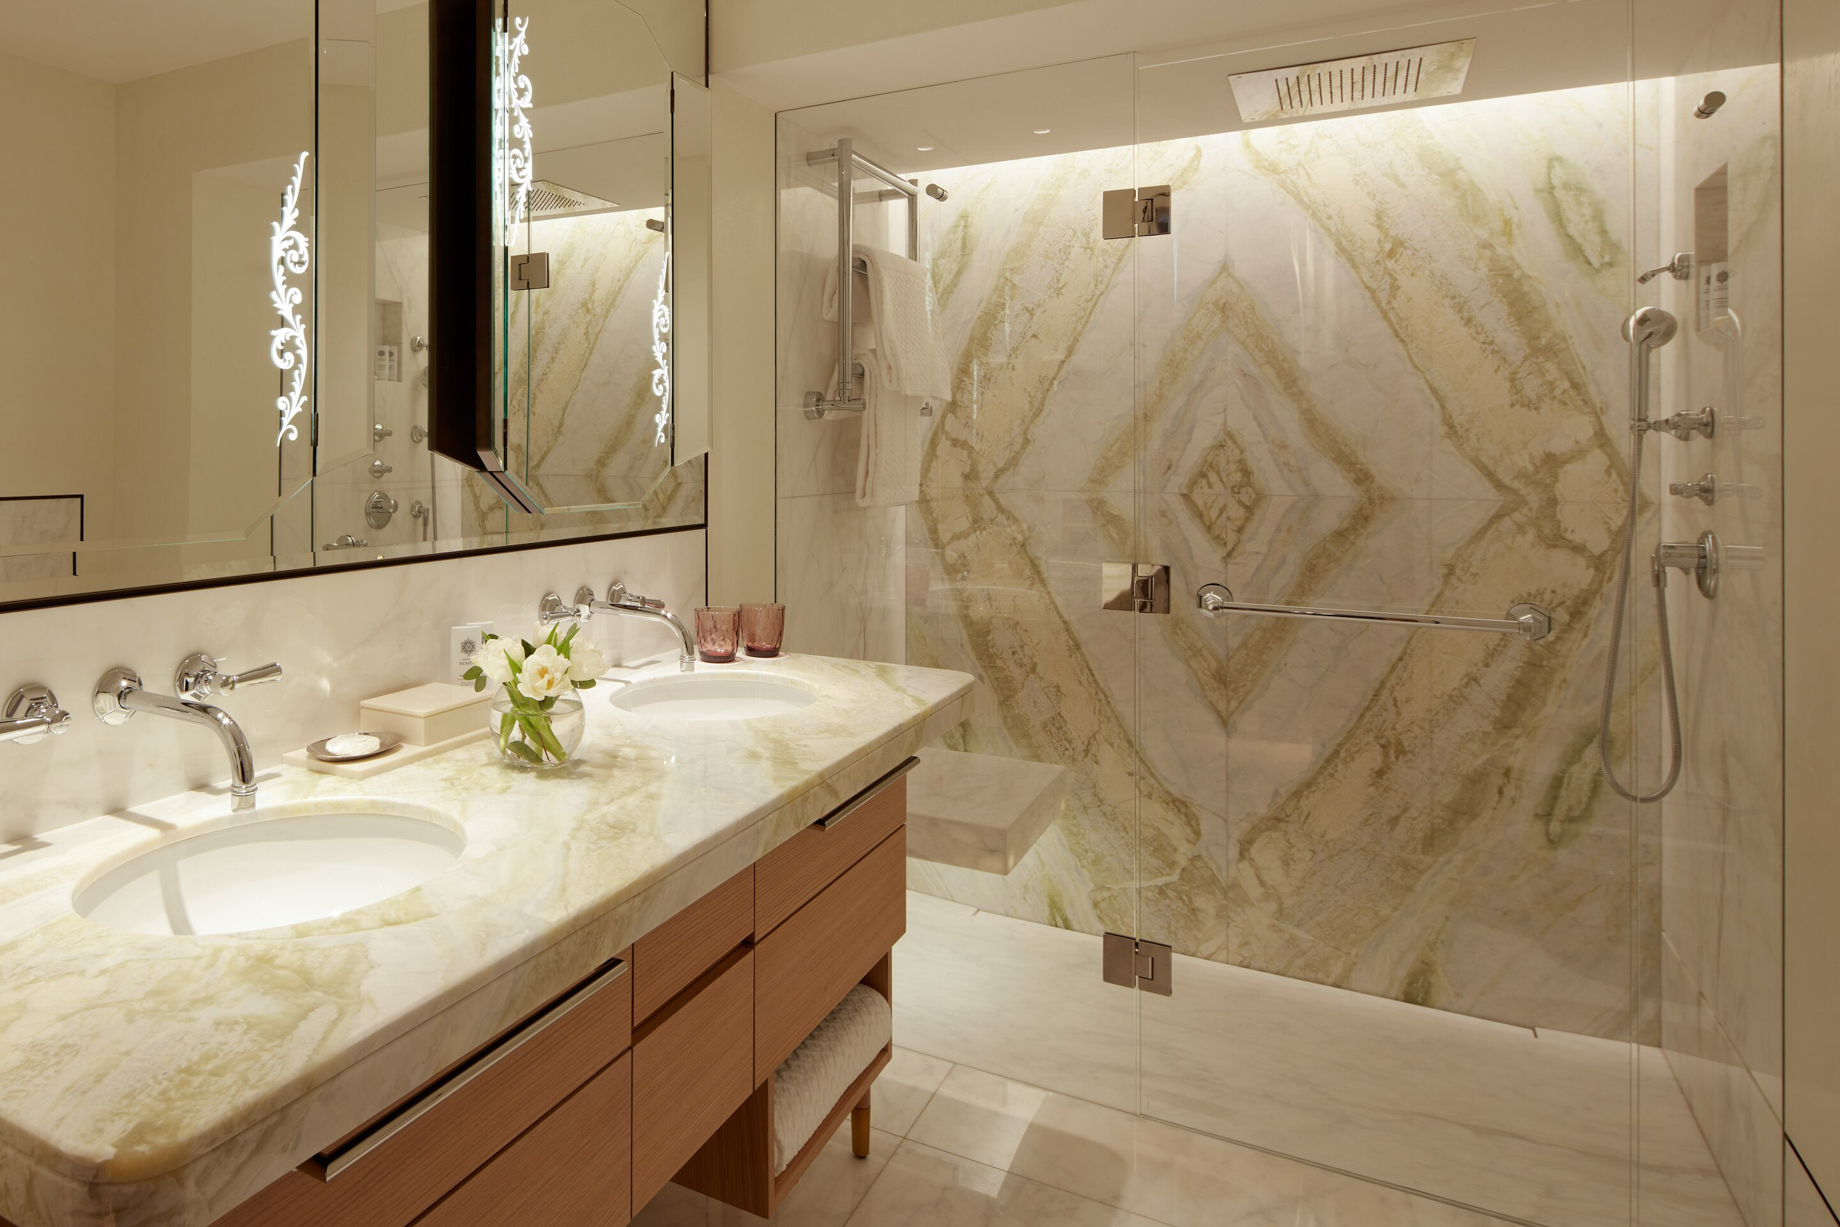 The St. Regis Venice Hotel - Venice, Italy - Penthouse Suite Marble Bathroom